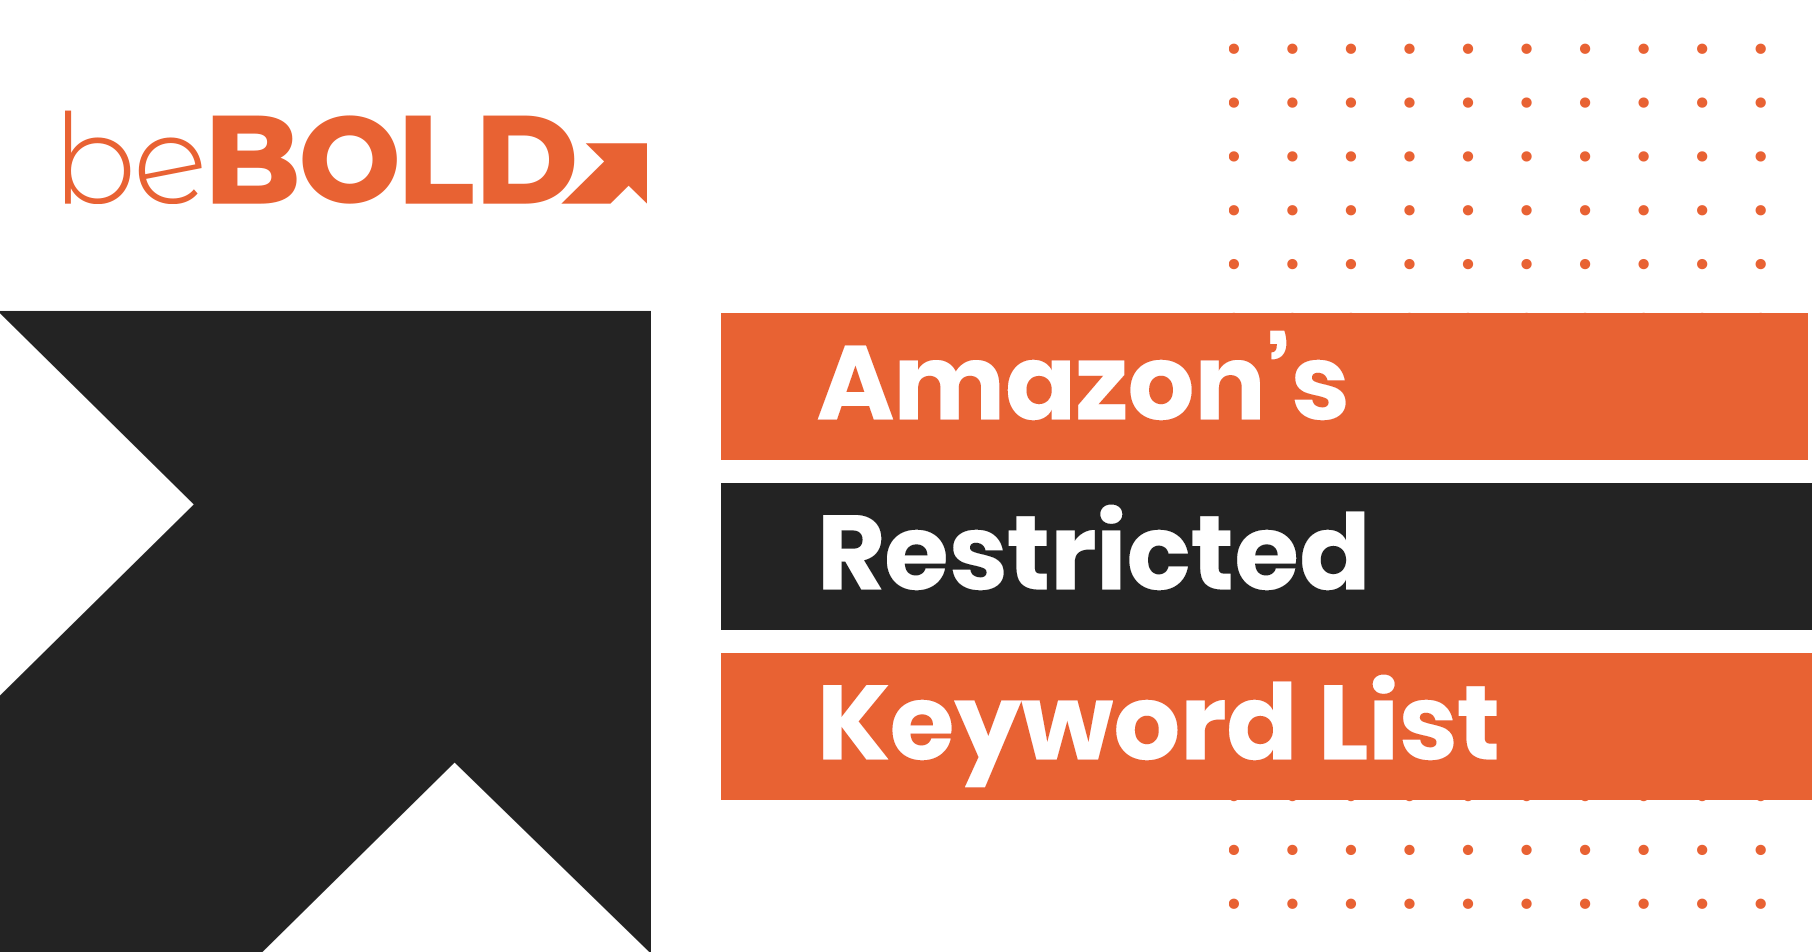 Amazon Restricted Keyword List